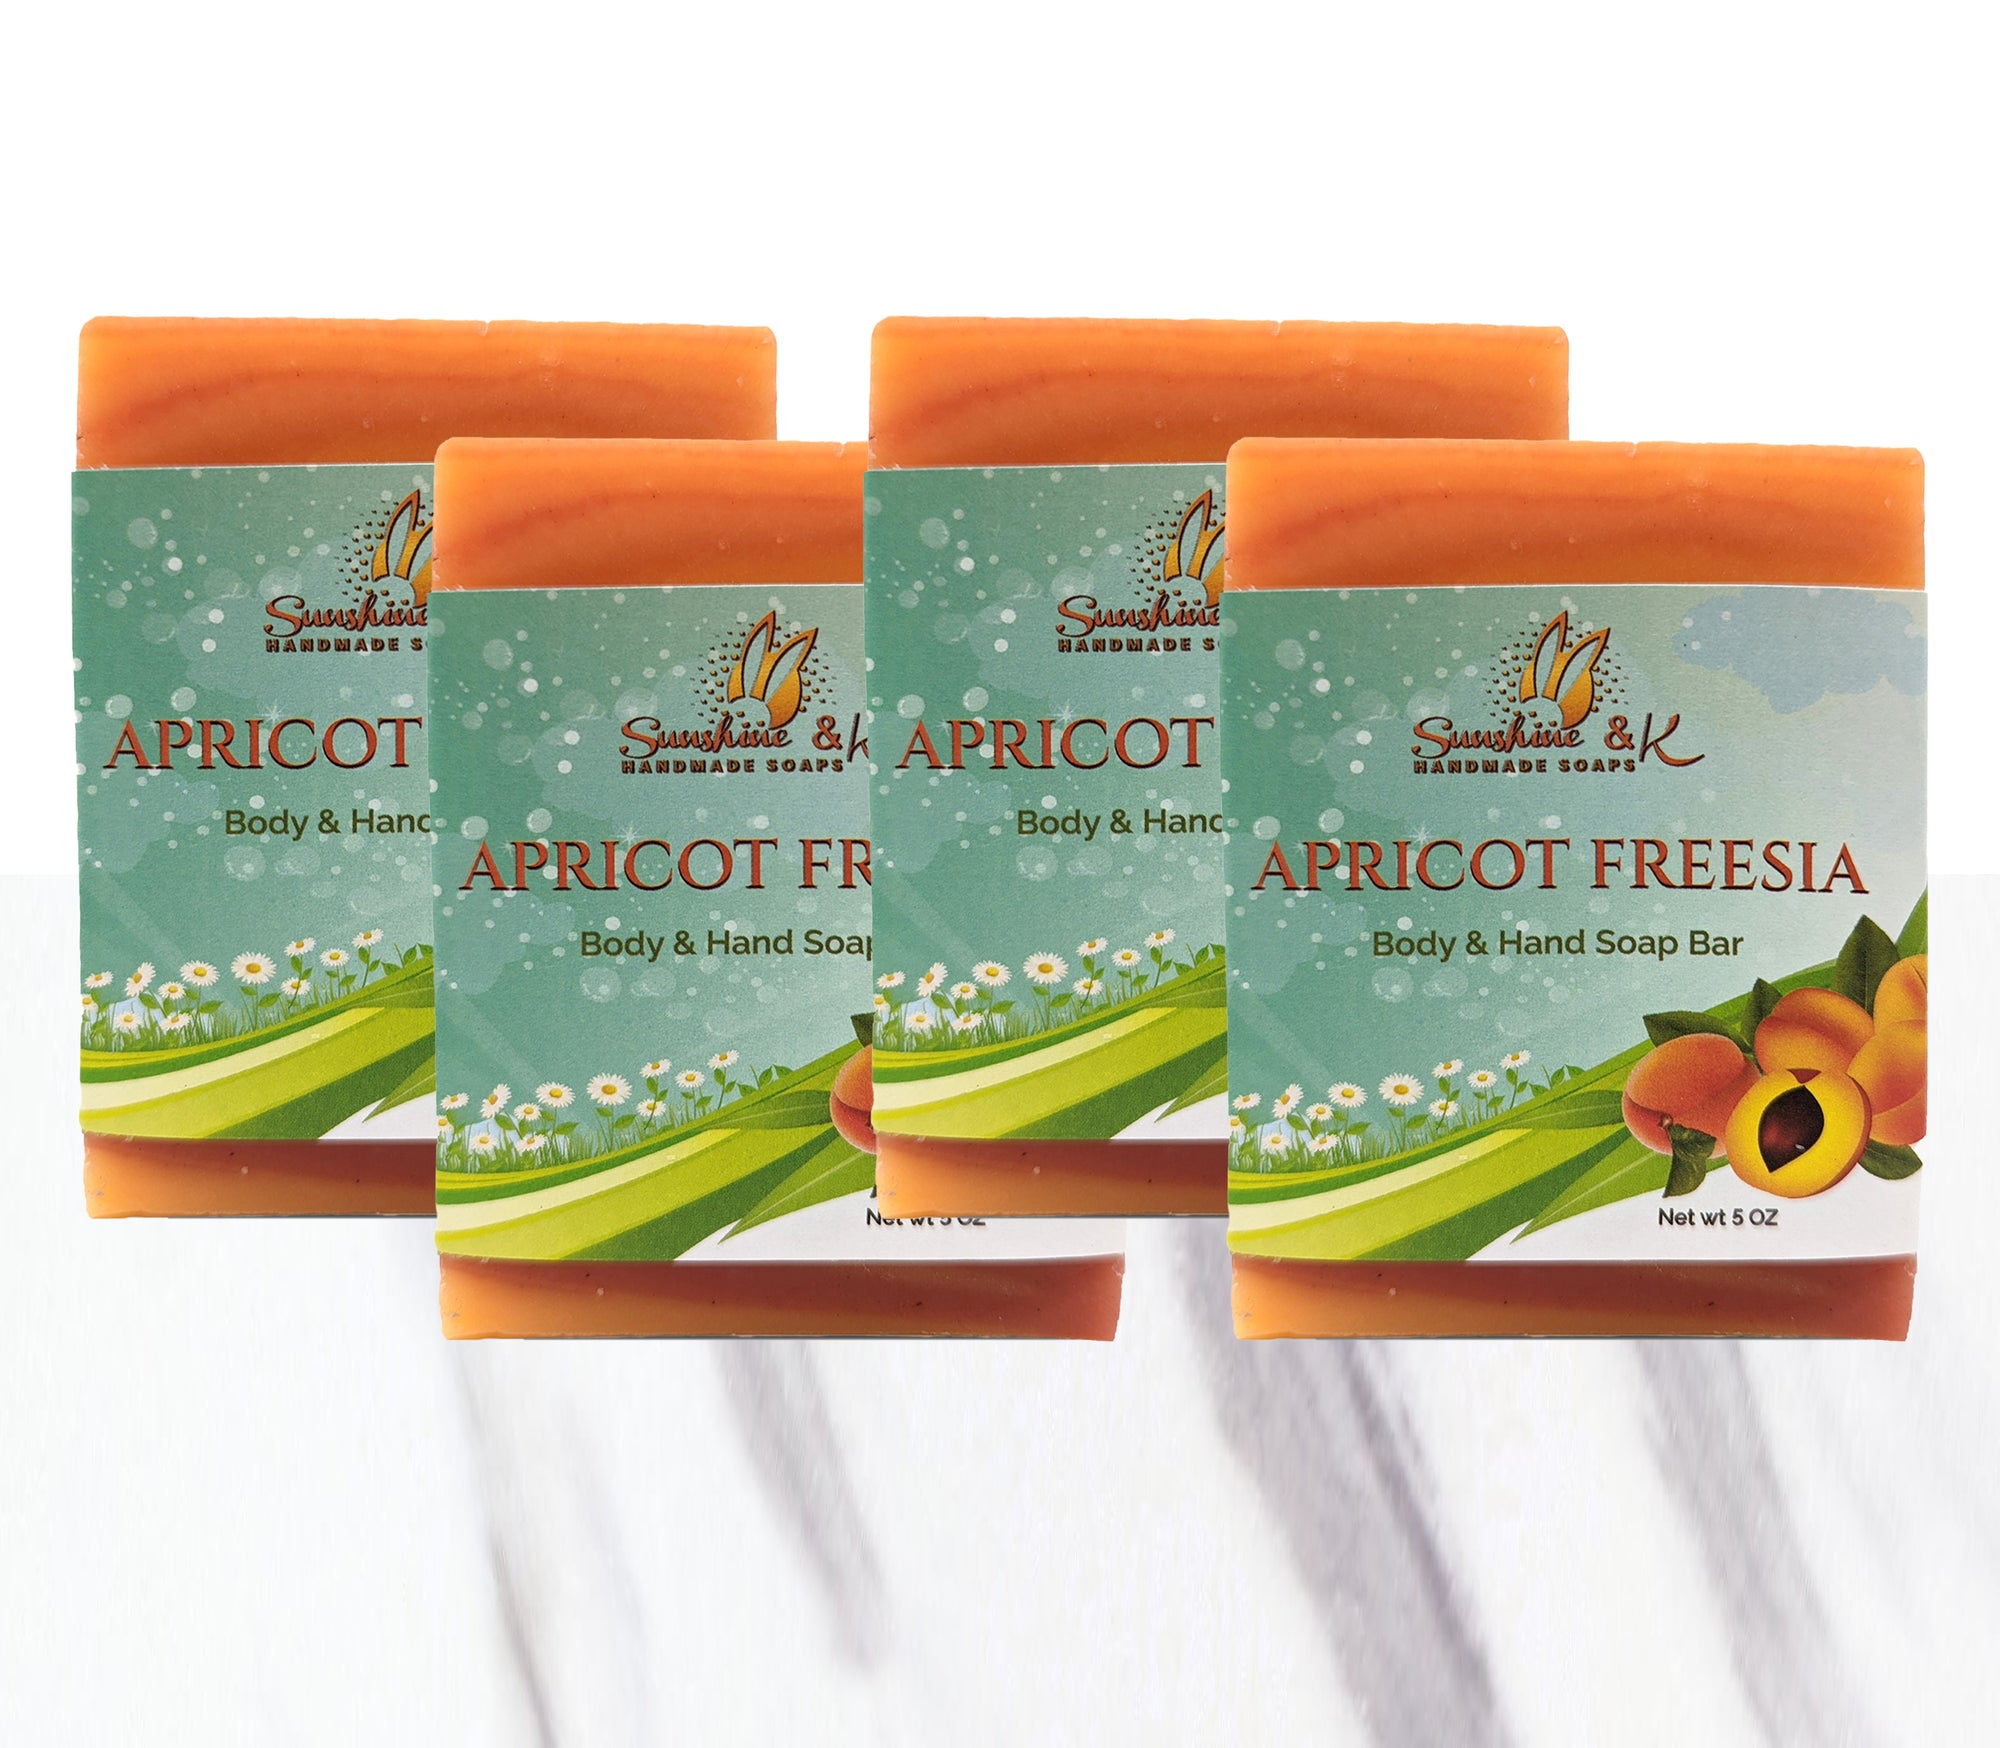 Apricot Freesia Bar Soap - Body & Face Bar Soap, Handmade Bath Soap, Moisturizing Bar Soap With Beeswax, Rice Bran Oil, & Natural Base Oils, Natural Soap Bars, 5 oz, Sunshine & K Handmade Soaps